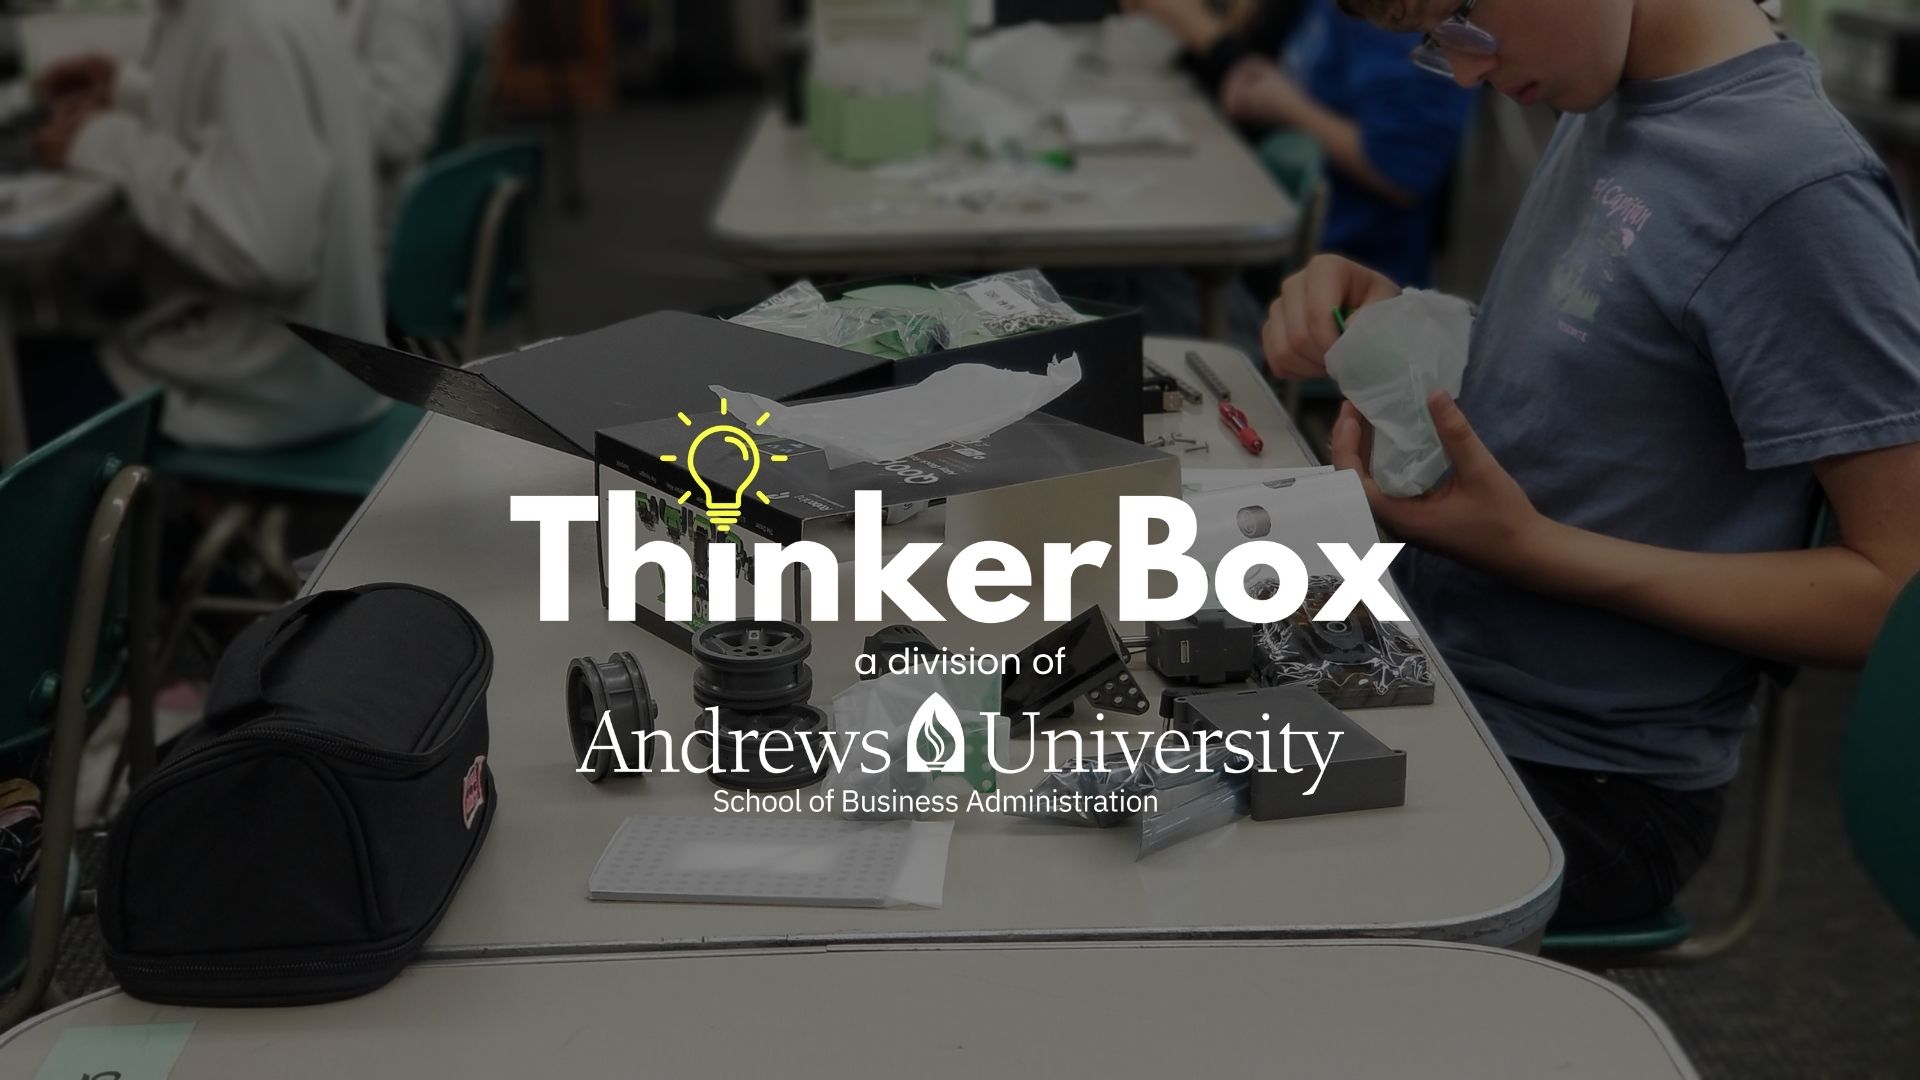 Launch of ThinkerBox: Revolutionizing Education